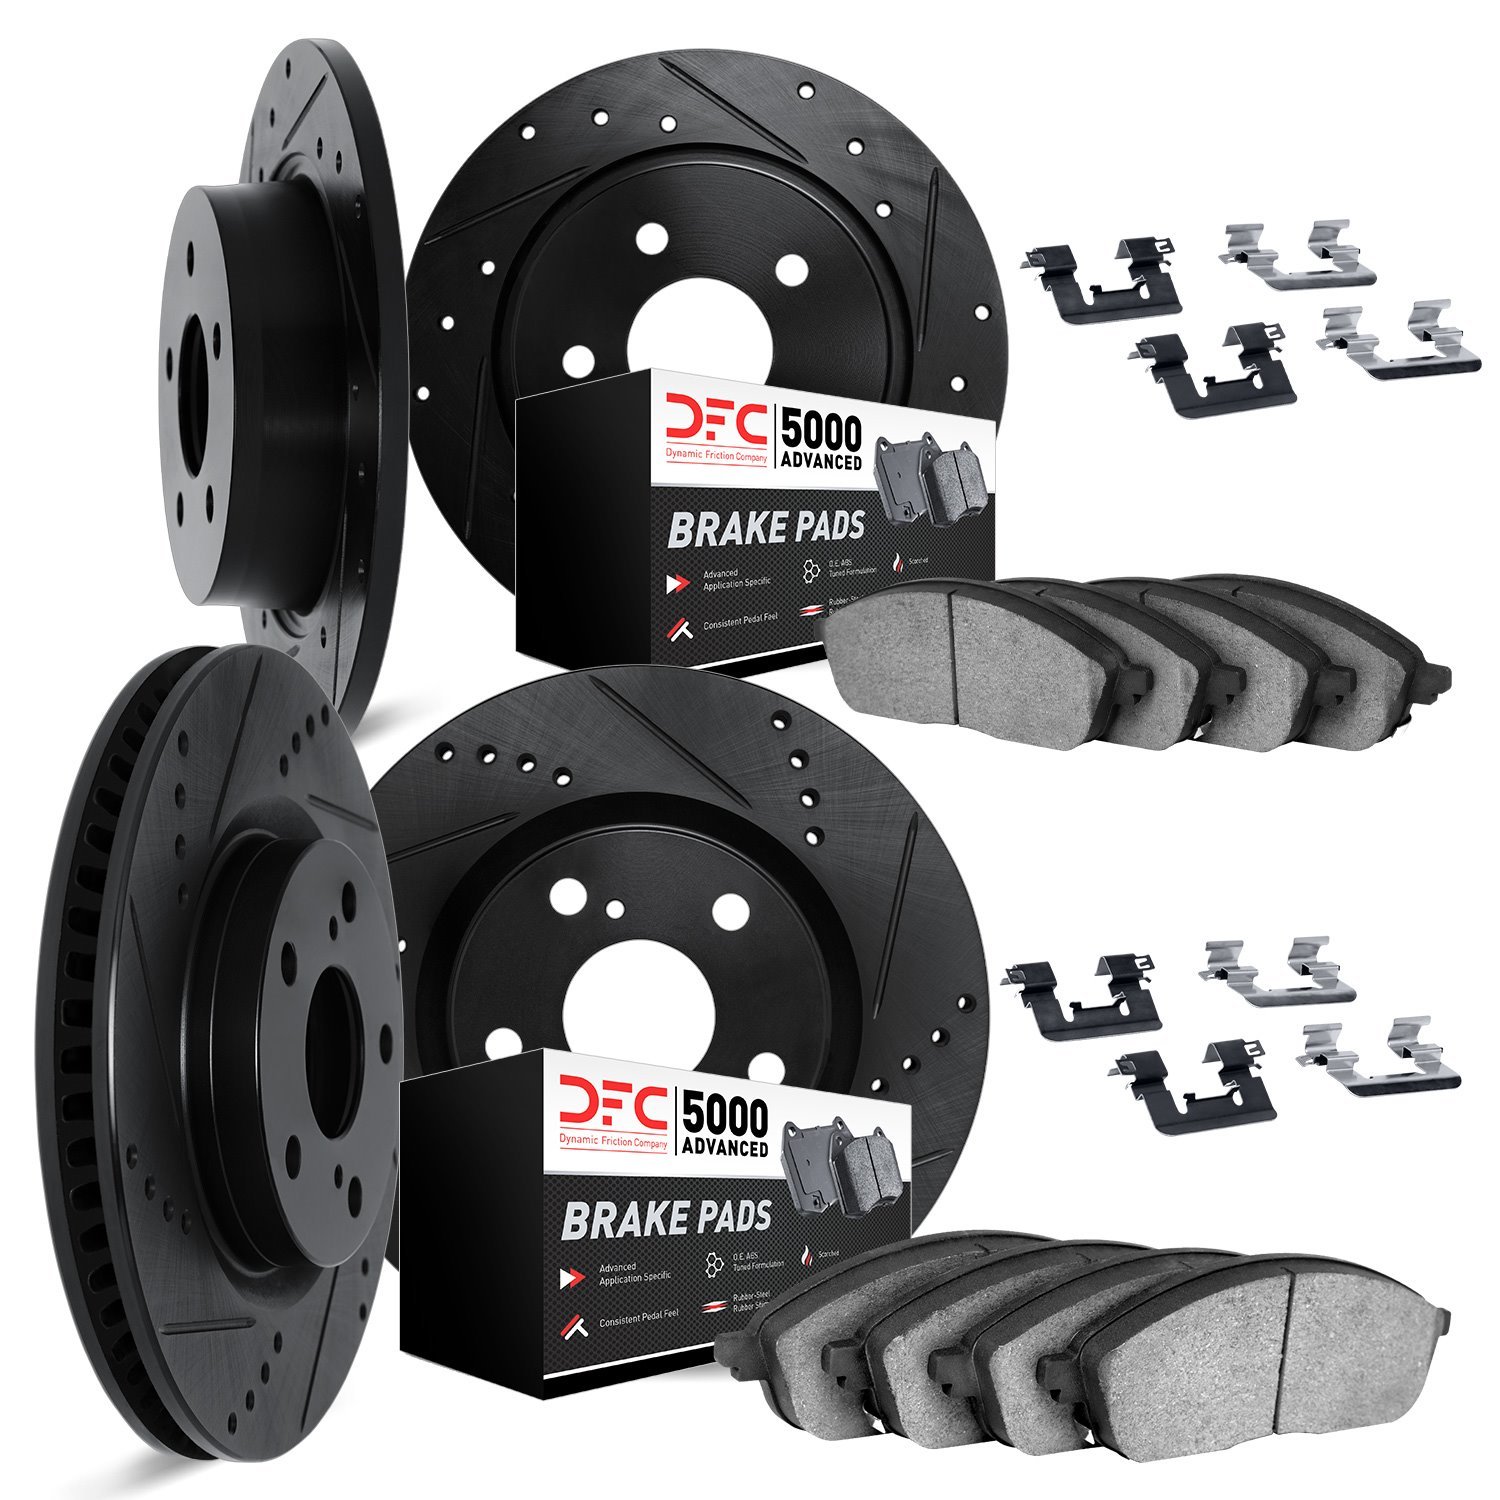 8514-39028 Drilled/Slotted Brake Rotors w/5000 Advanced Brake Pads Kit & Hardware [Black], Fits Select Mopar, Position: Front an